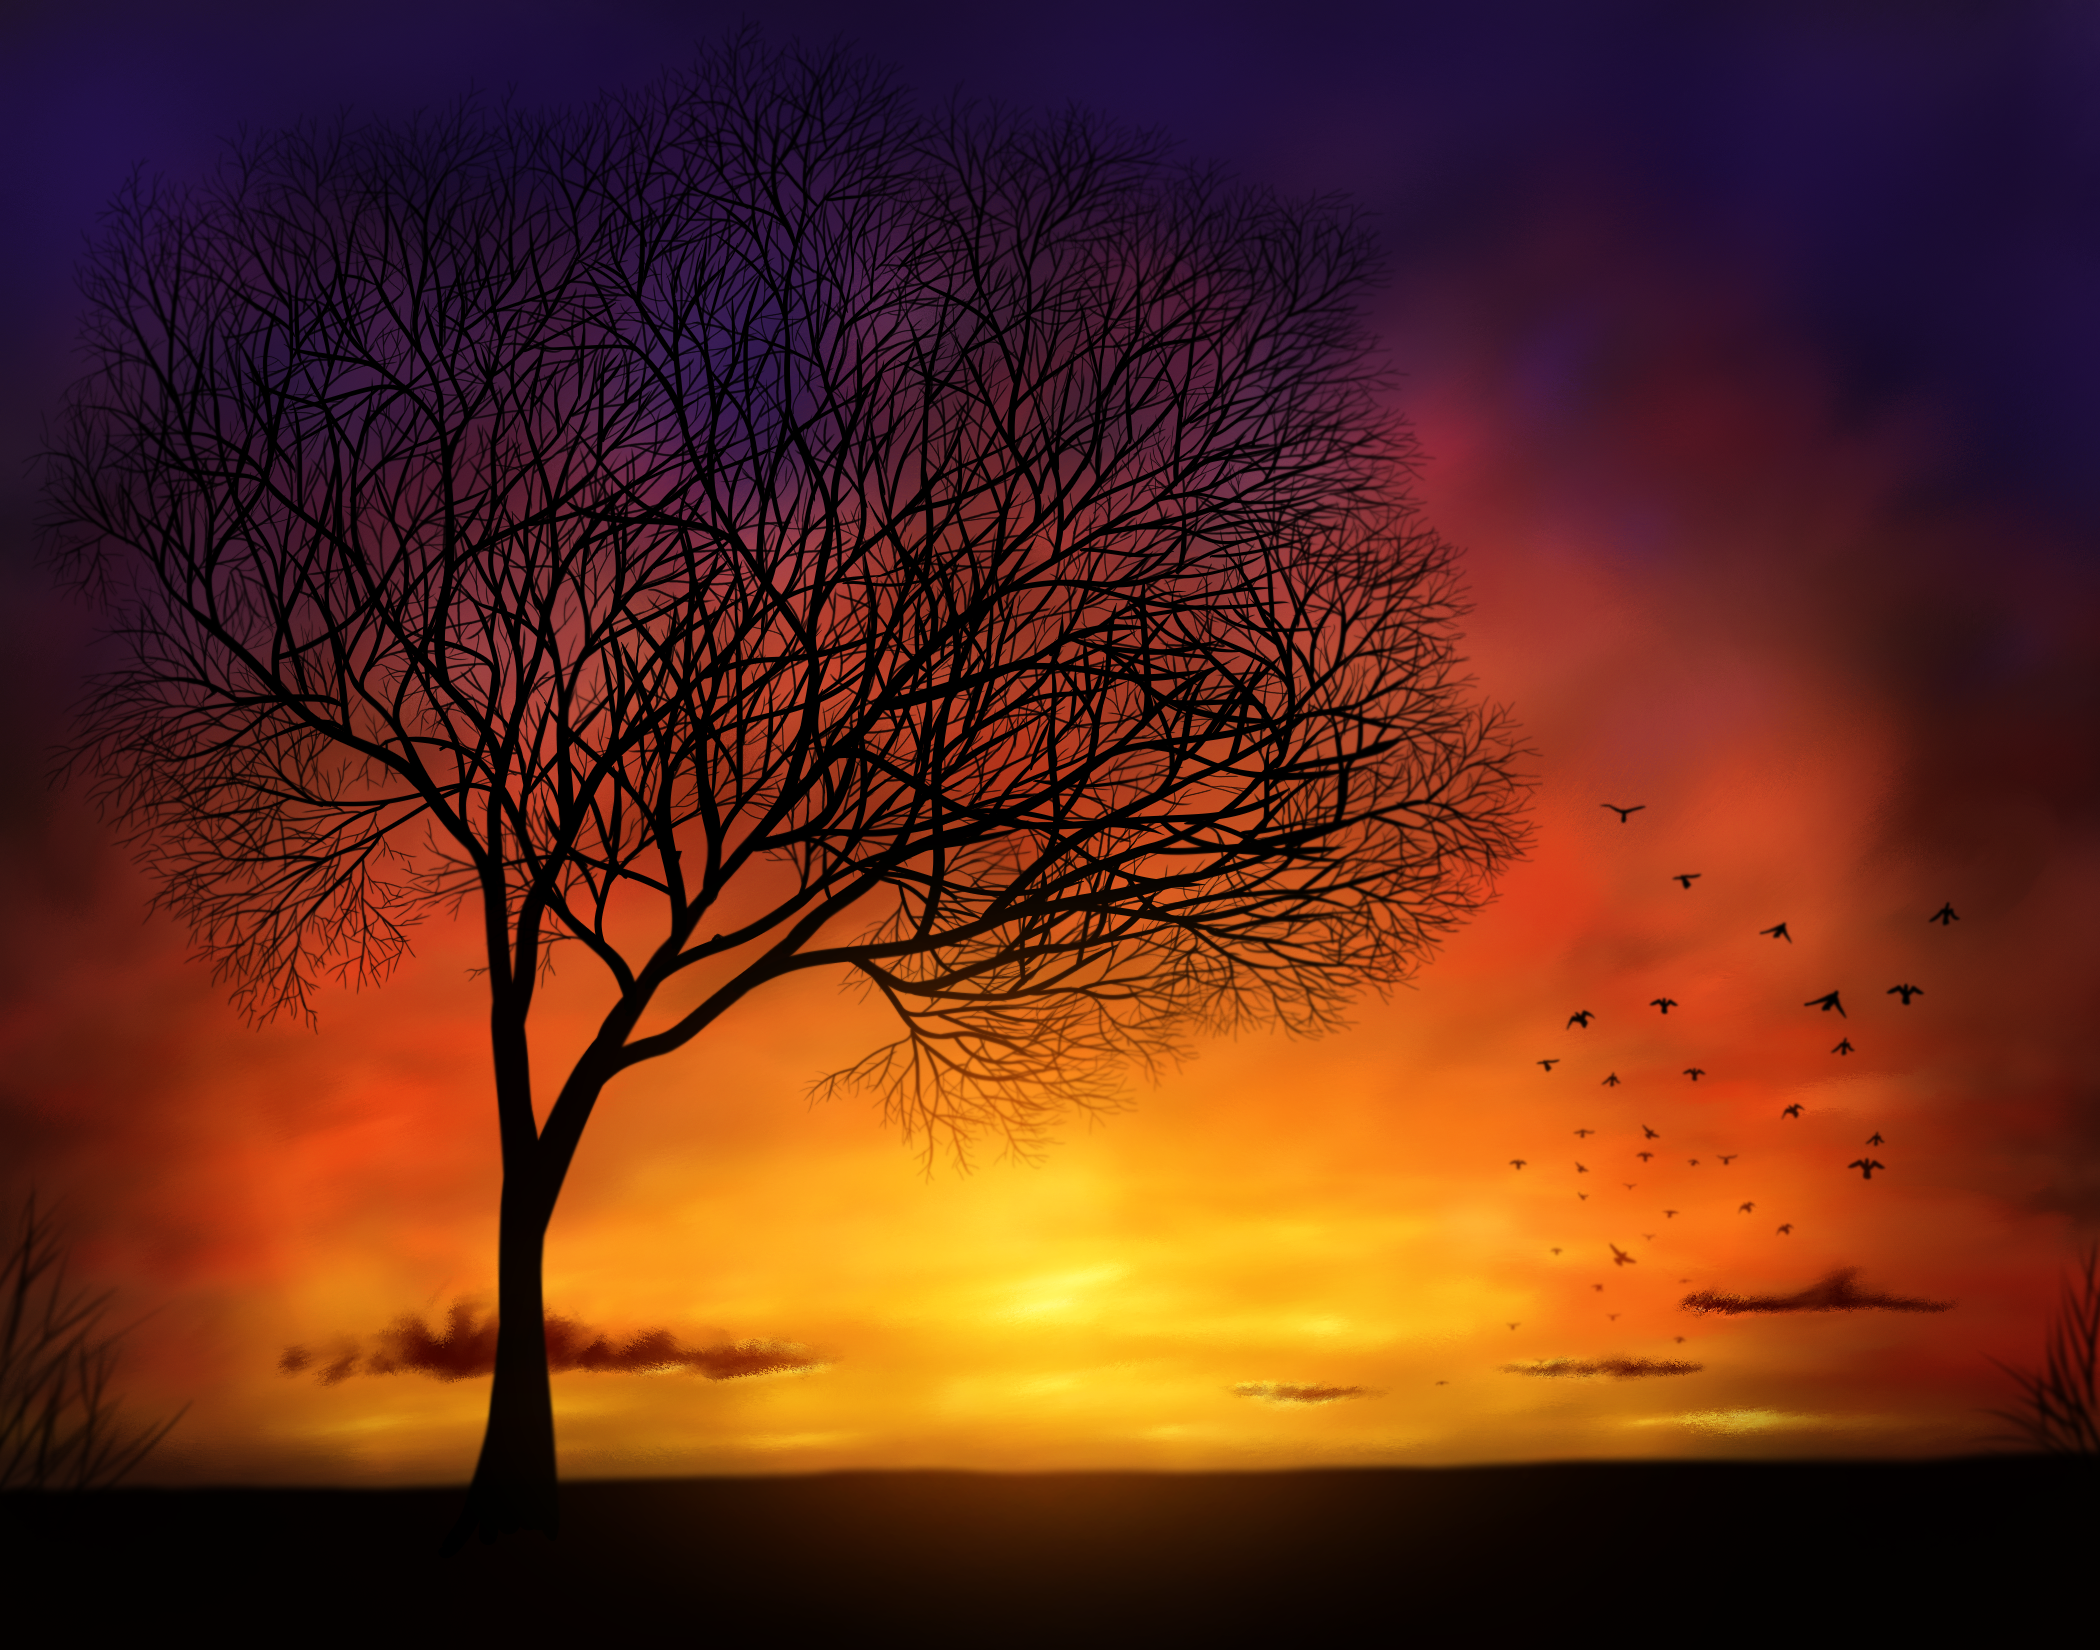 Sunset Sky And Dead Tree by AaronRutten on DeviantArt